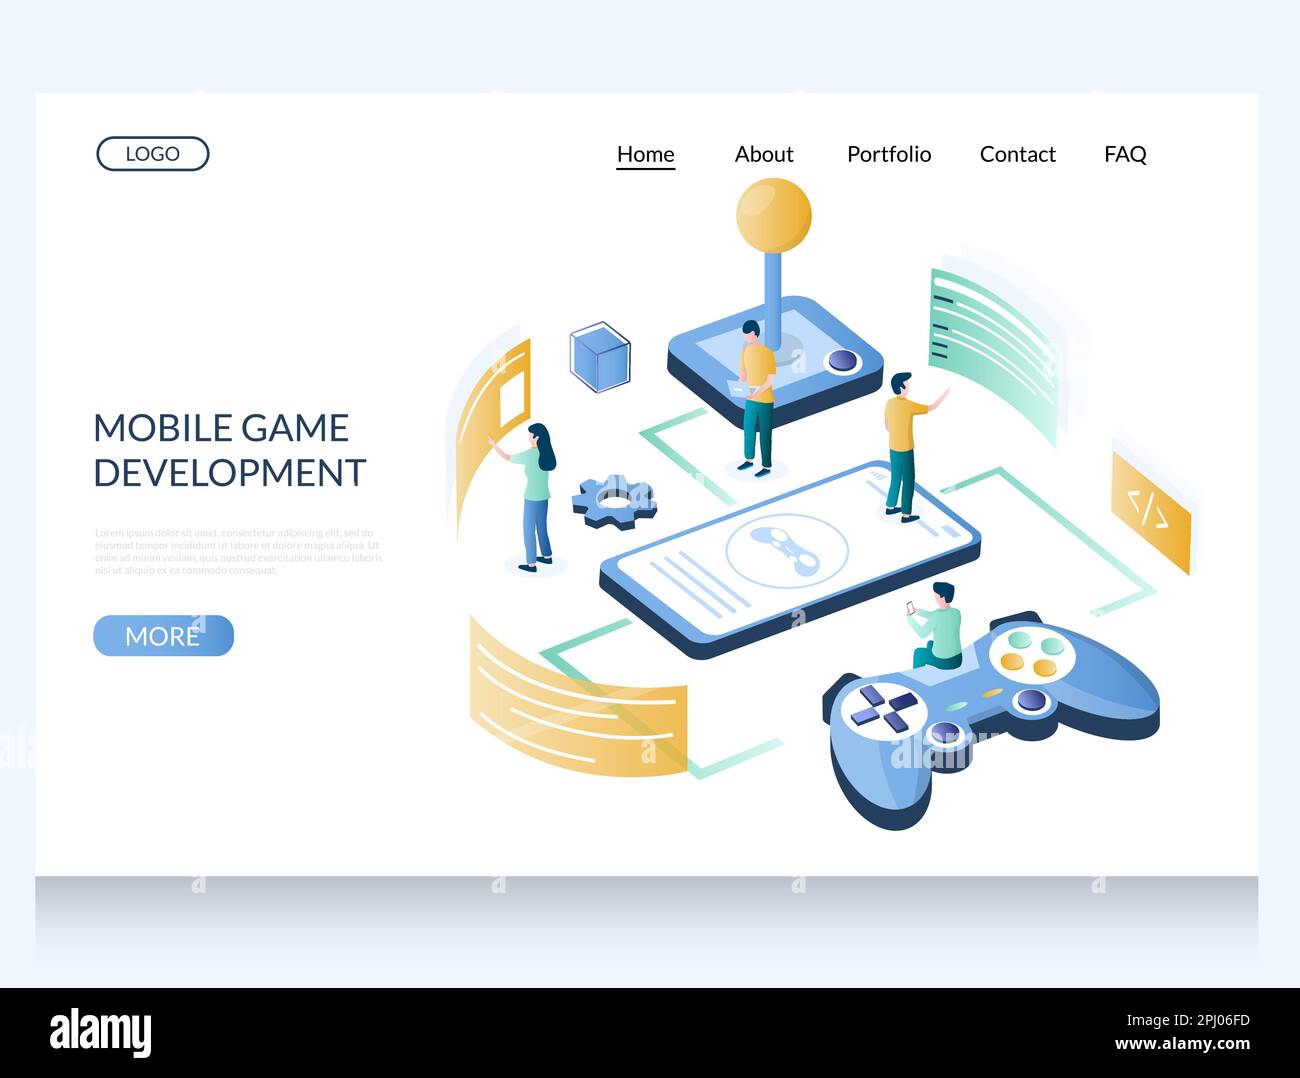 Mobile game development vector website landing page design template Stock Vector